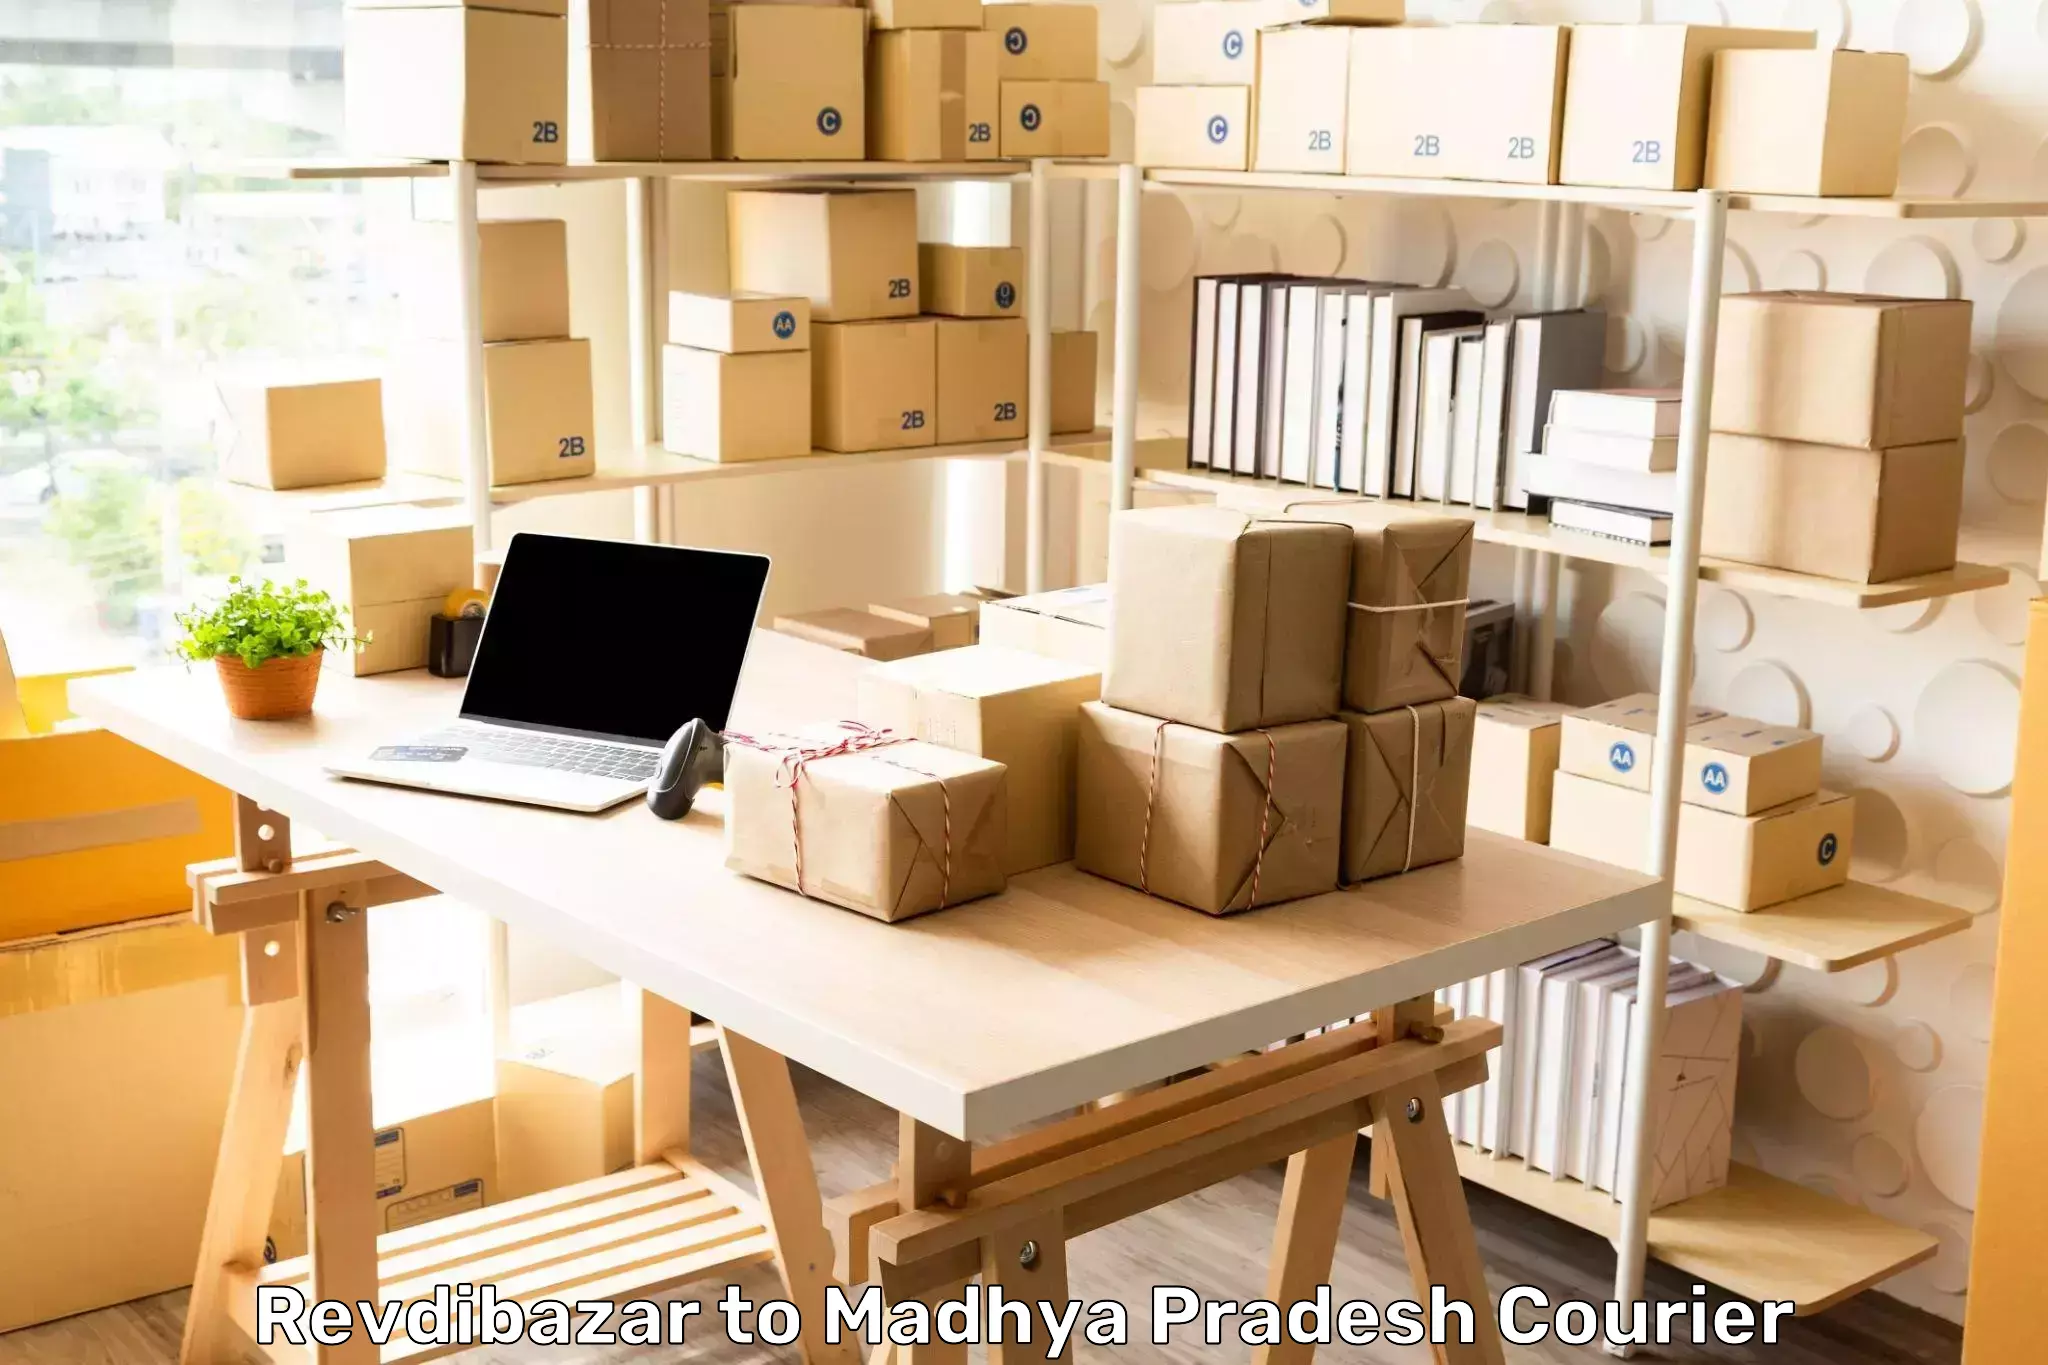 High-capacity parcel service Revdibazar to Rajendragram